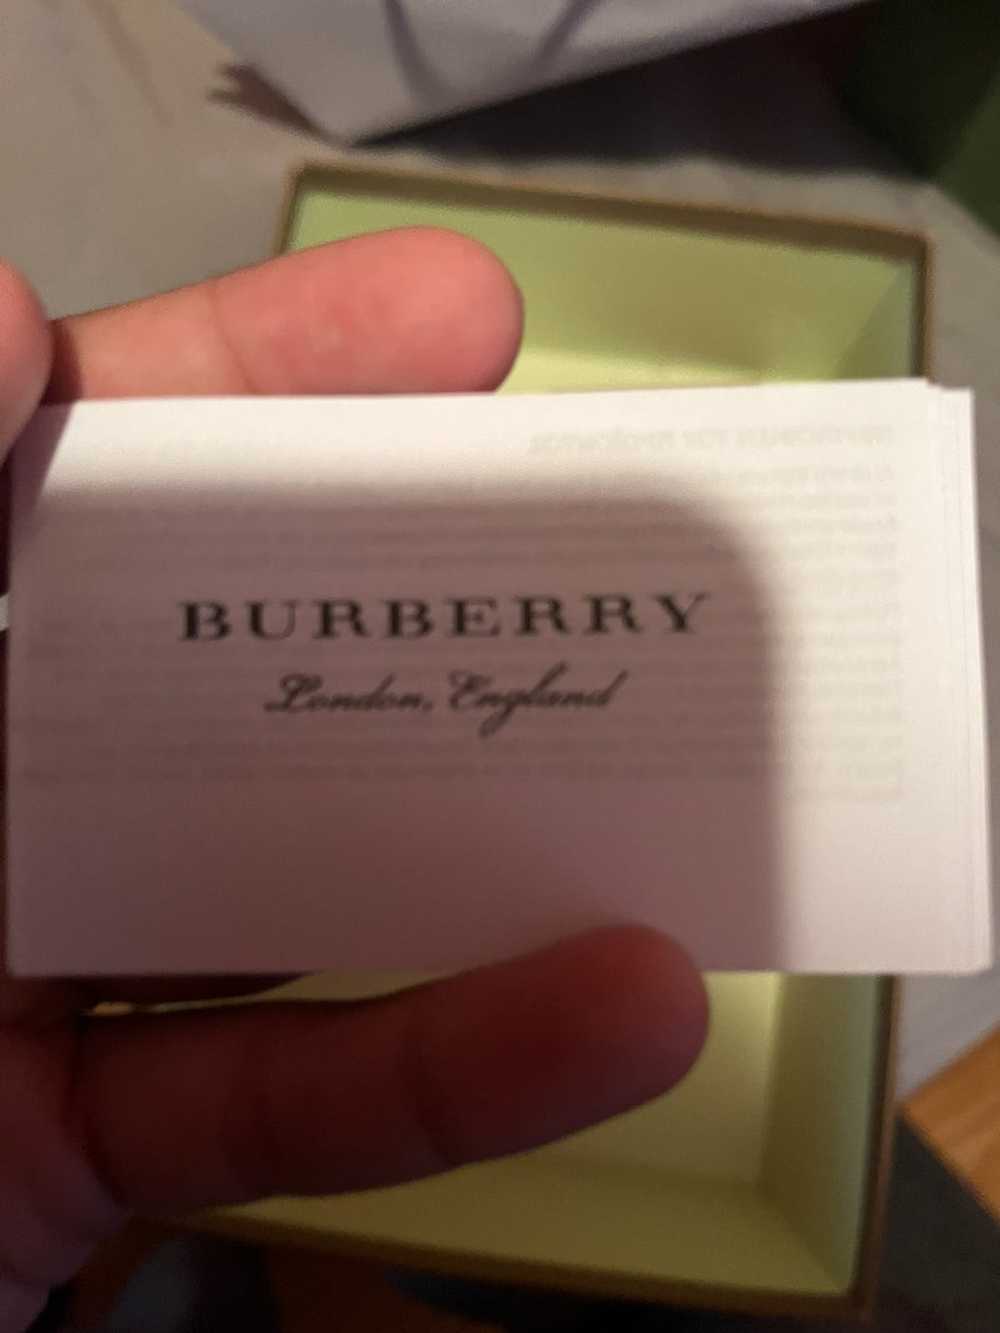 Burberry Burrberry - image 4